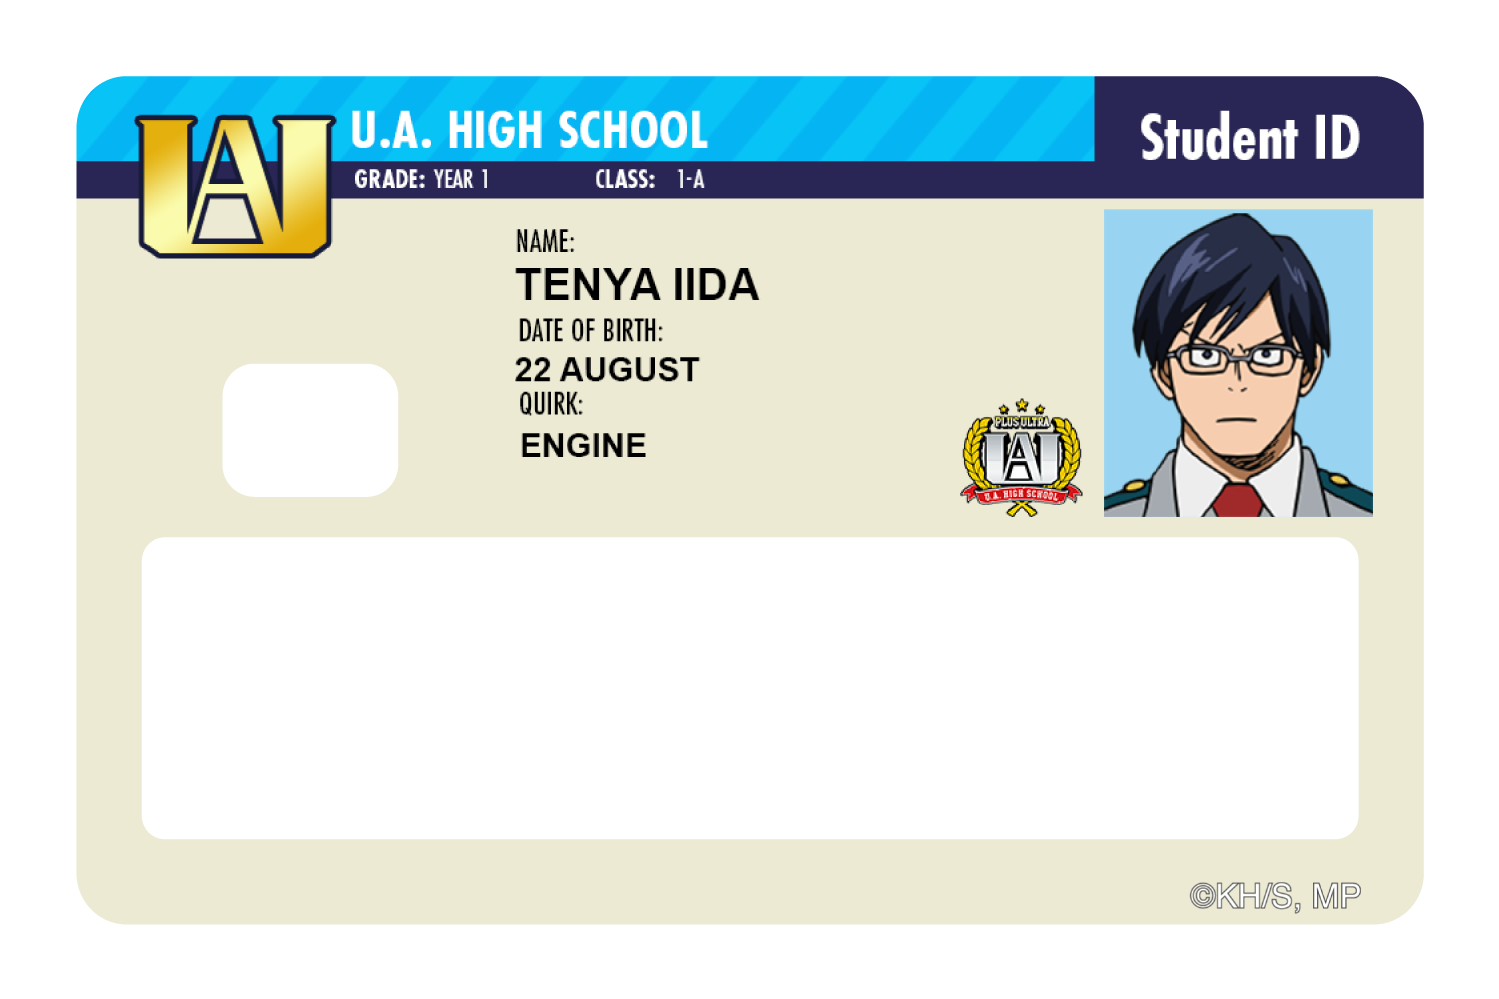 Student ID - Tenya Iida